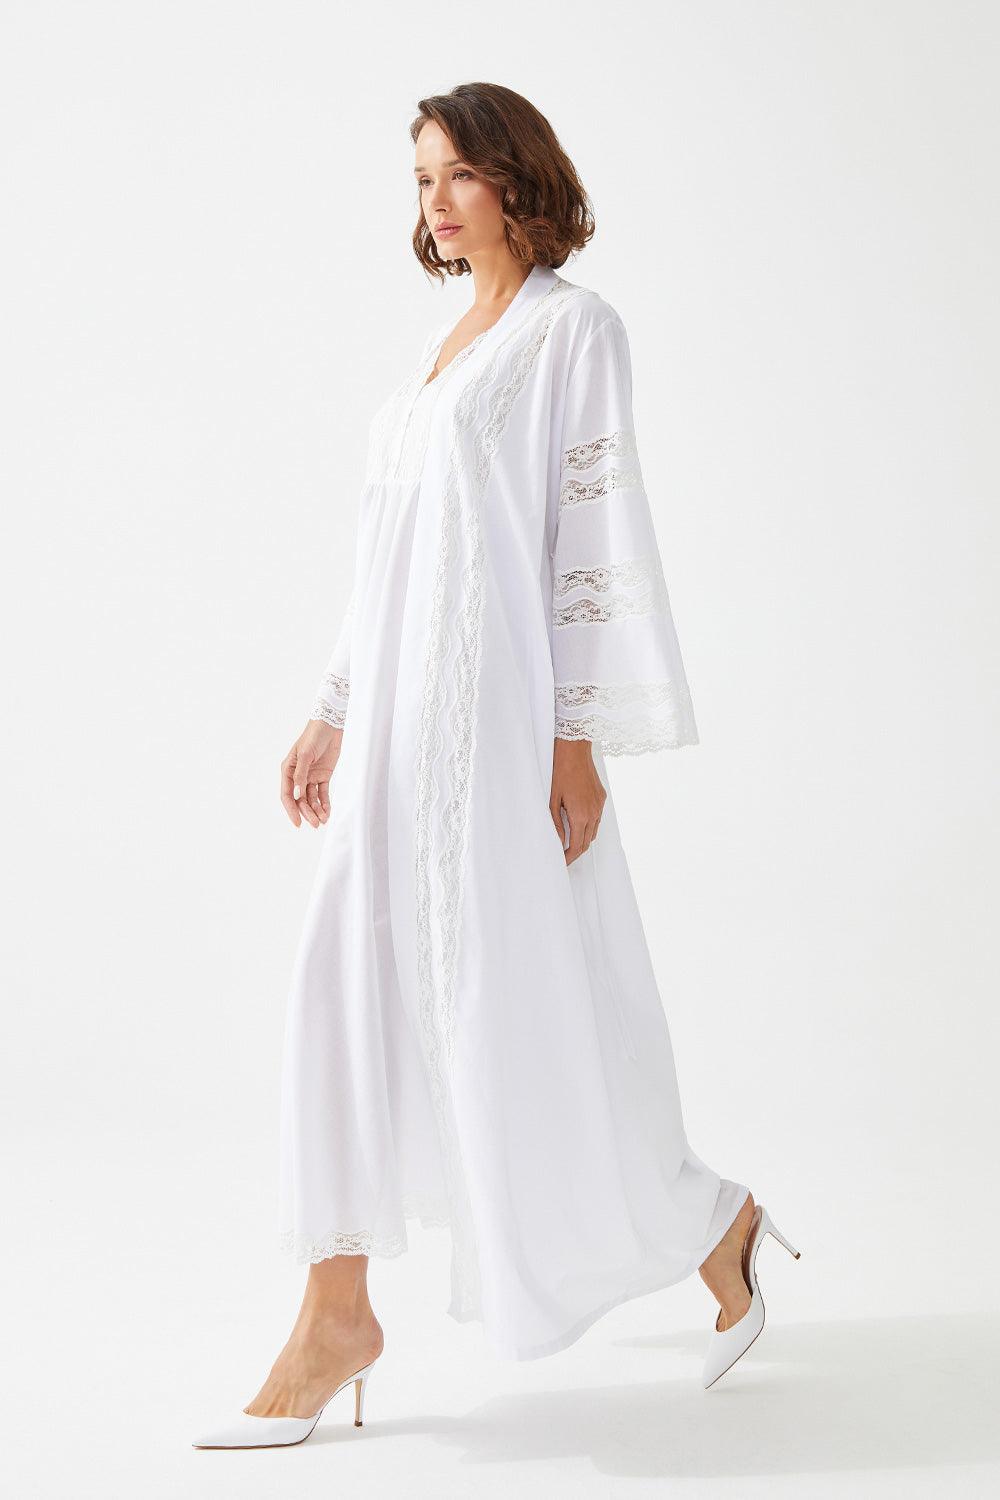 Women's Maternity Nightdress Long Sleeve Nursing Nightgown and Robe Set